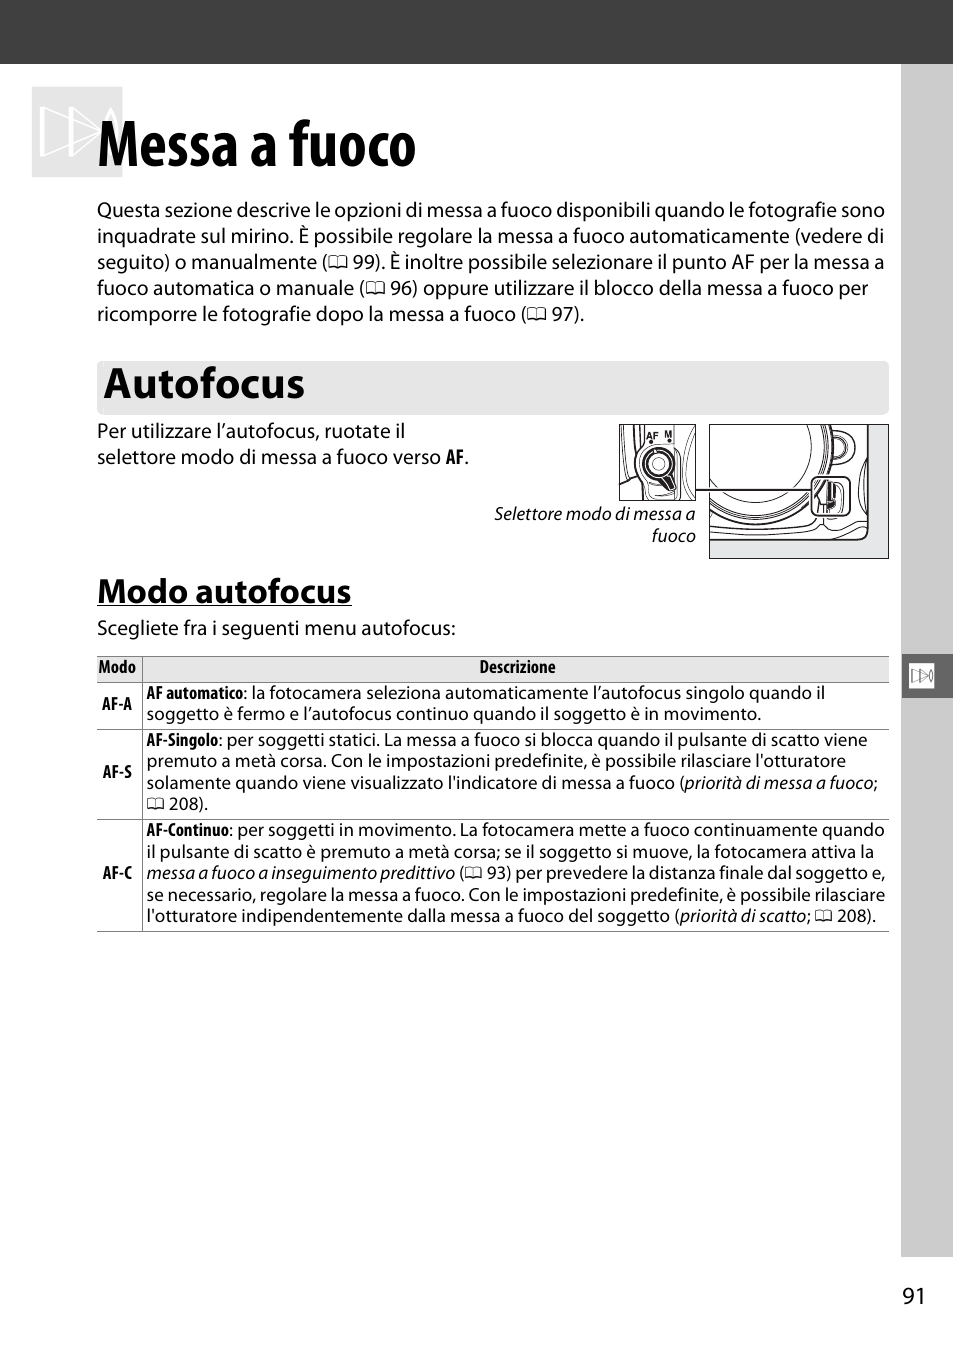 Messa a fuoco, Autofocus, Modo autofocus | Nikon D7000 Manuale d'uso | Pagina 111 / 348